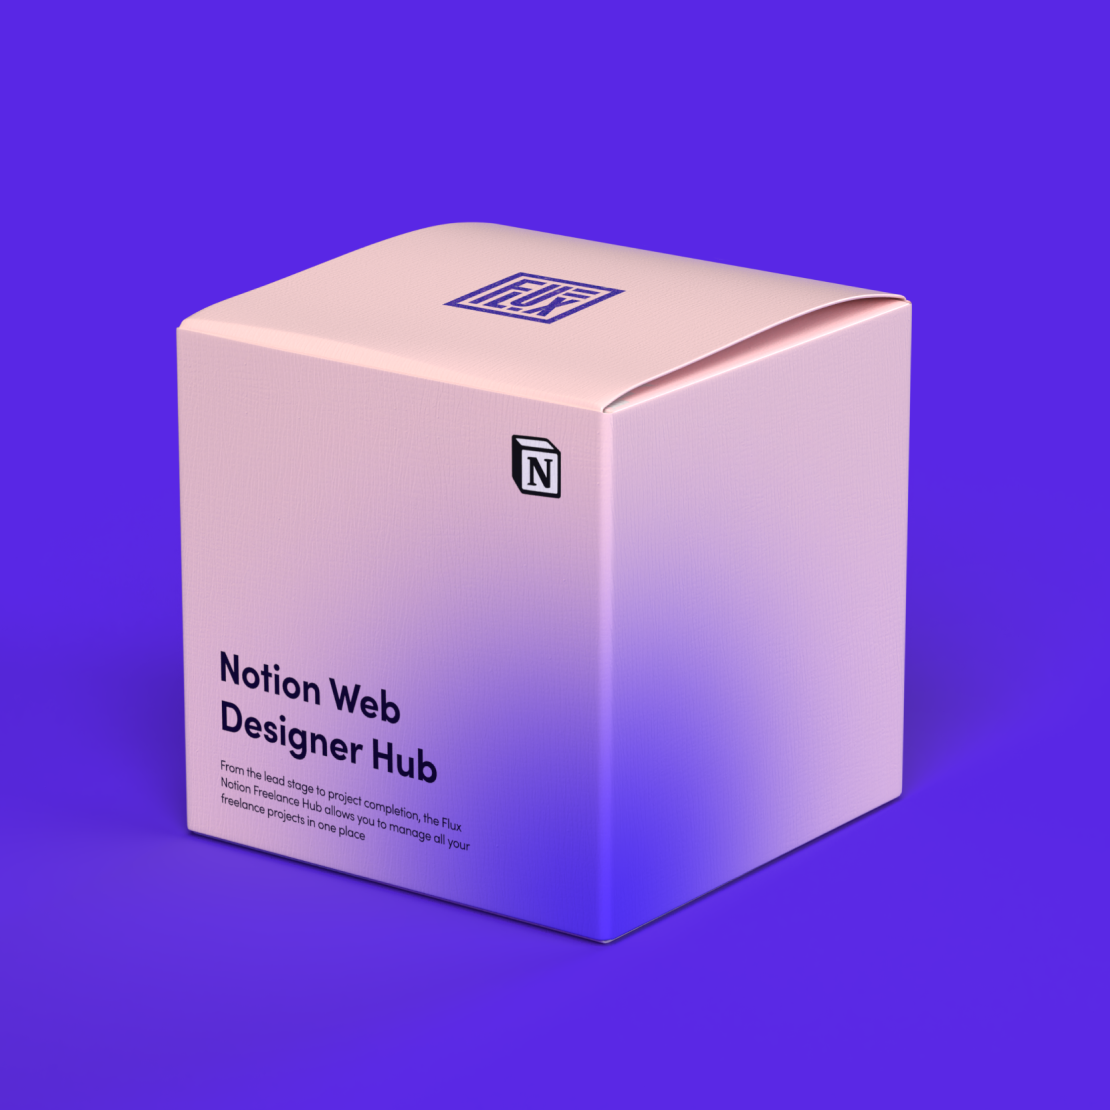 Notion Web Designer Hub